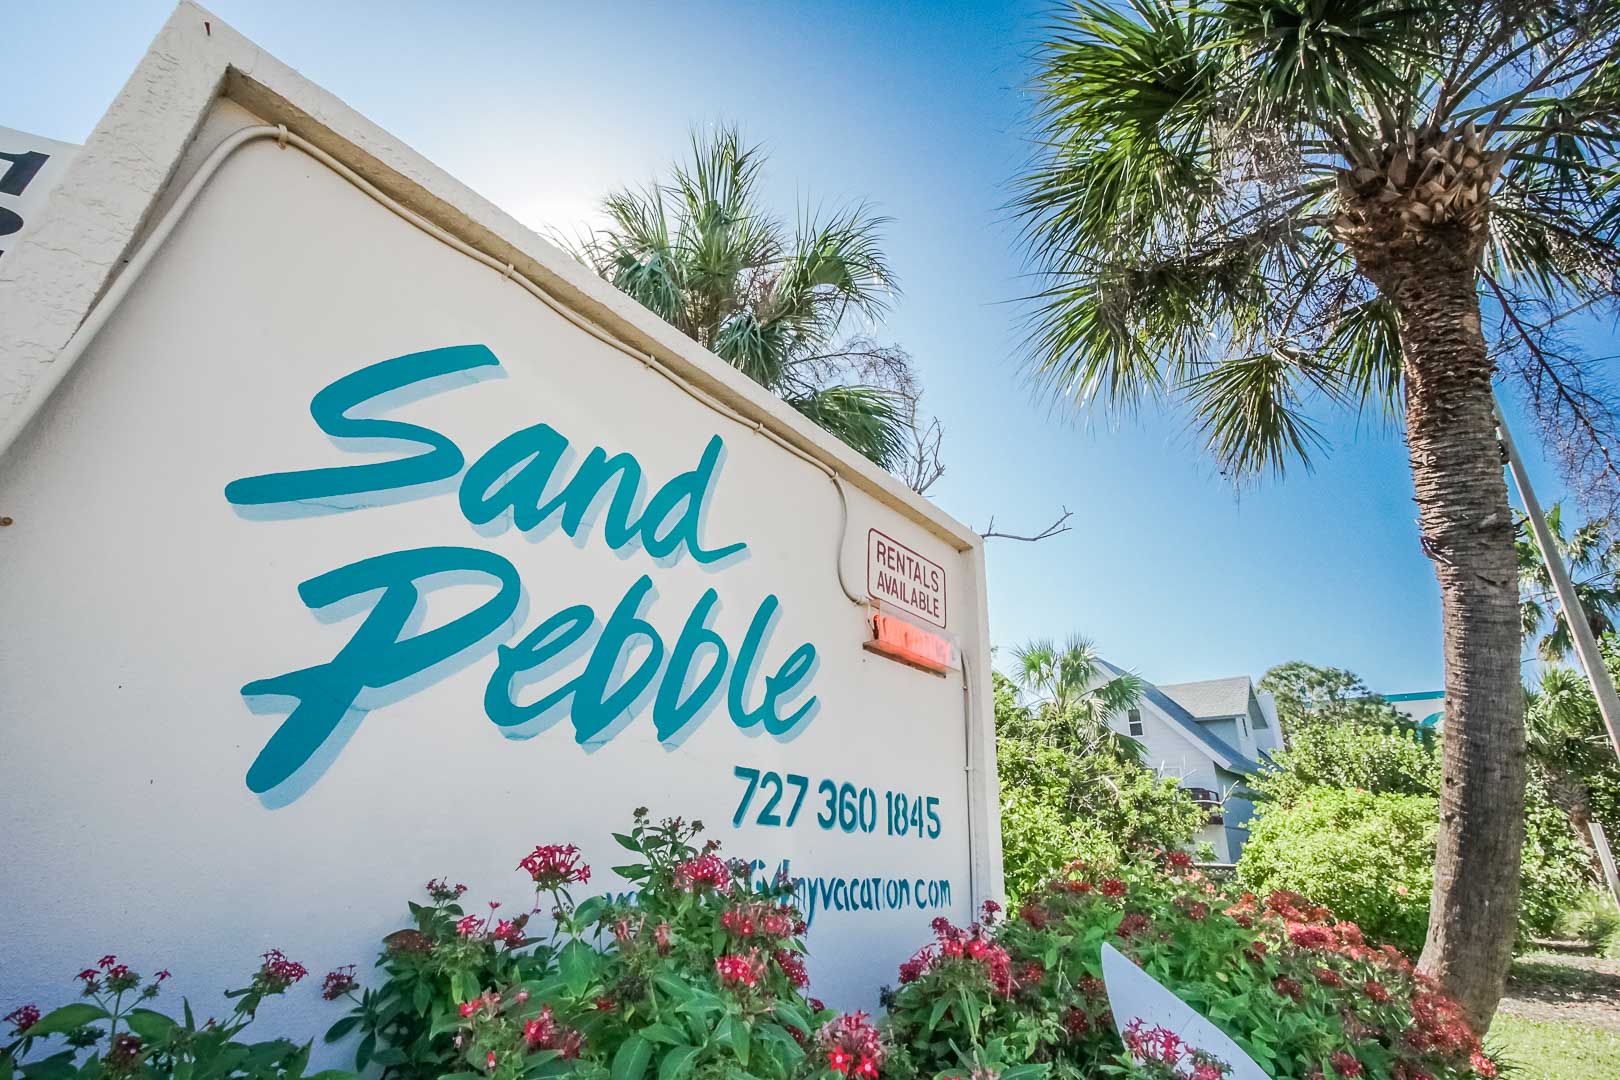 A vibrant resort signage at VRI's Sand Pebble Resort in Treasure Island, Florida.